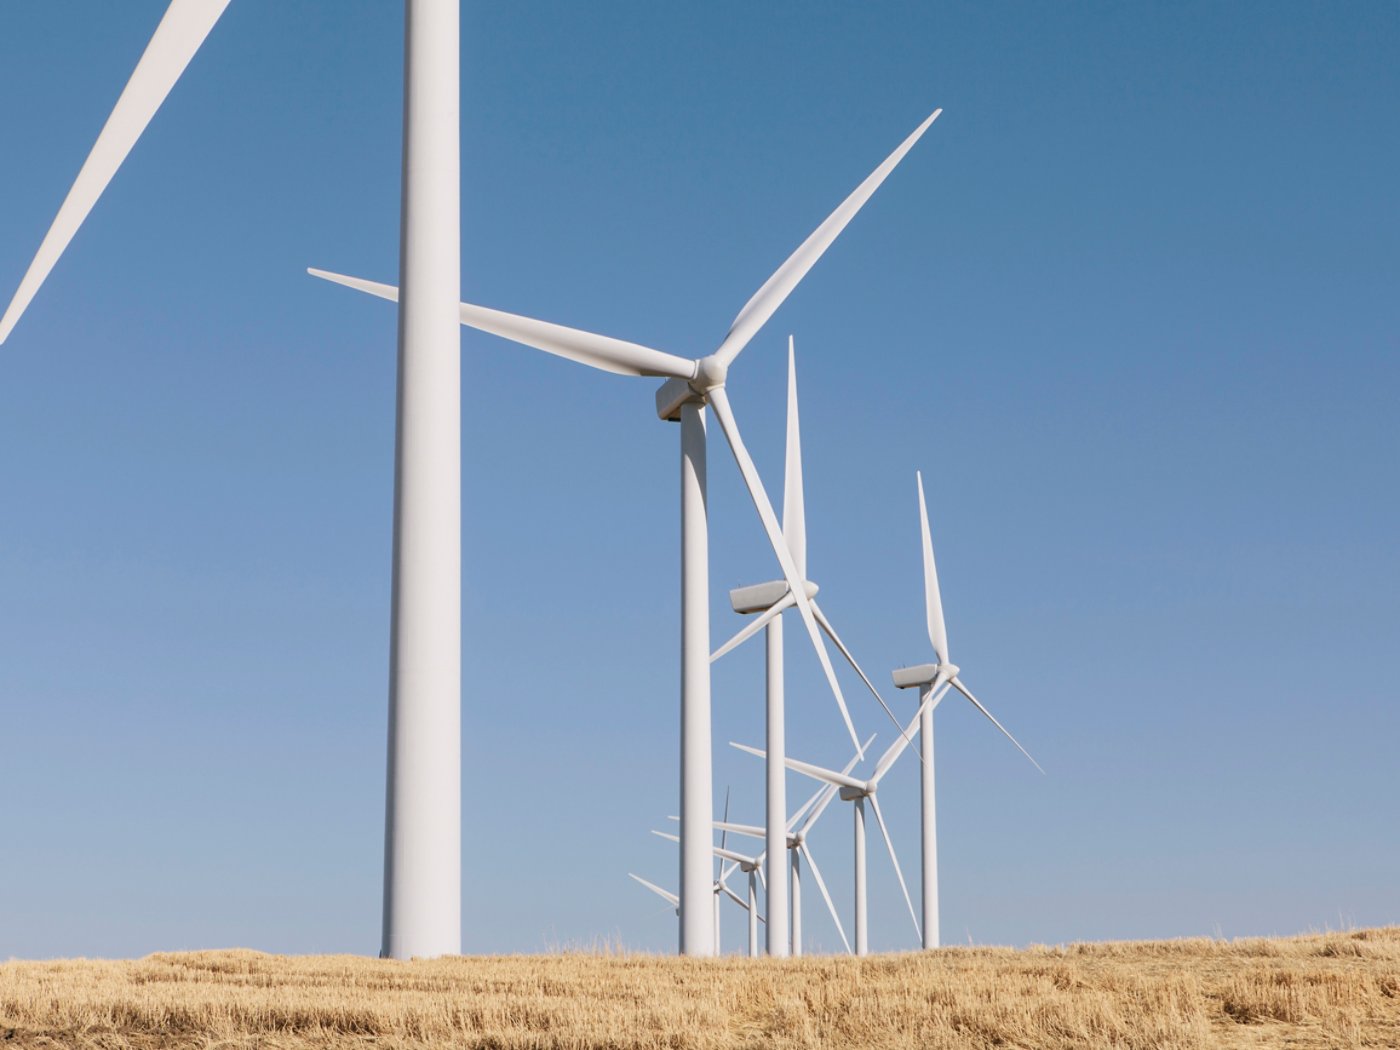 Tall wind turbines in open country farmland in Washington.